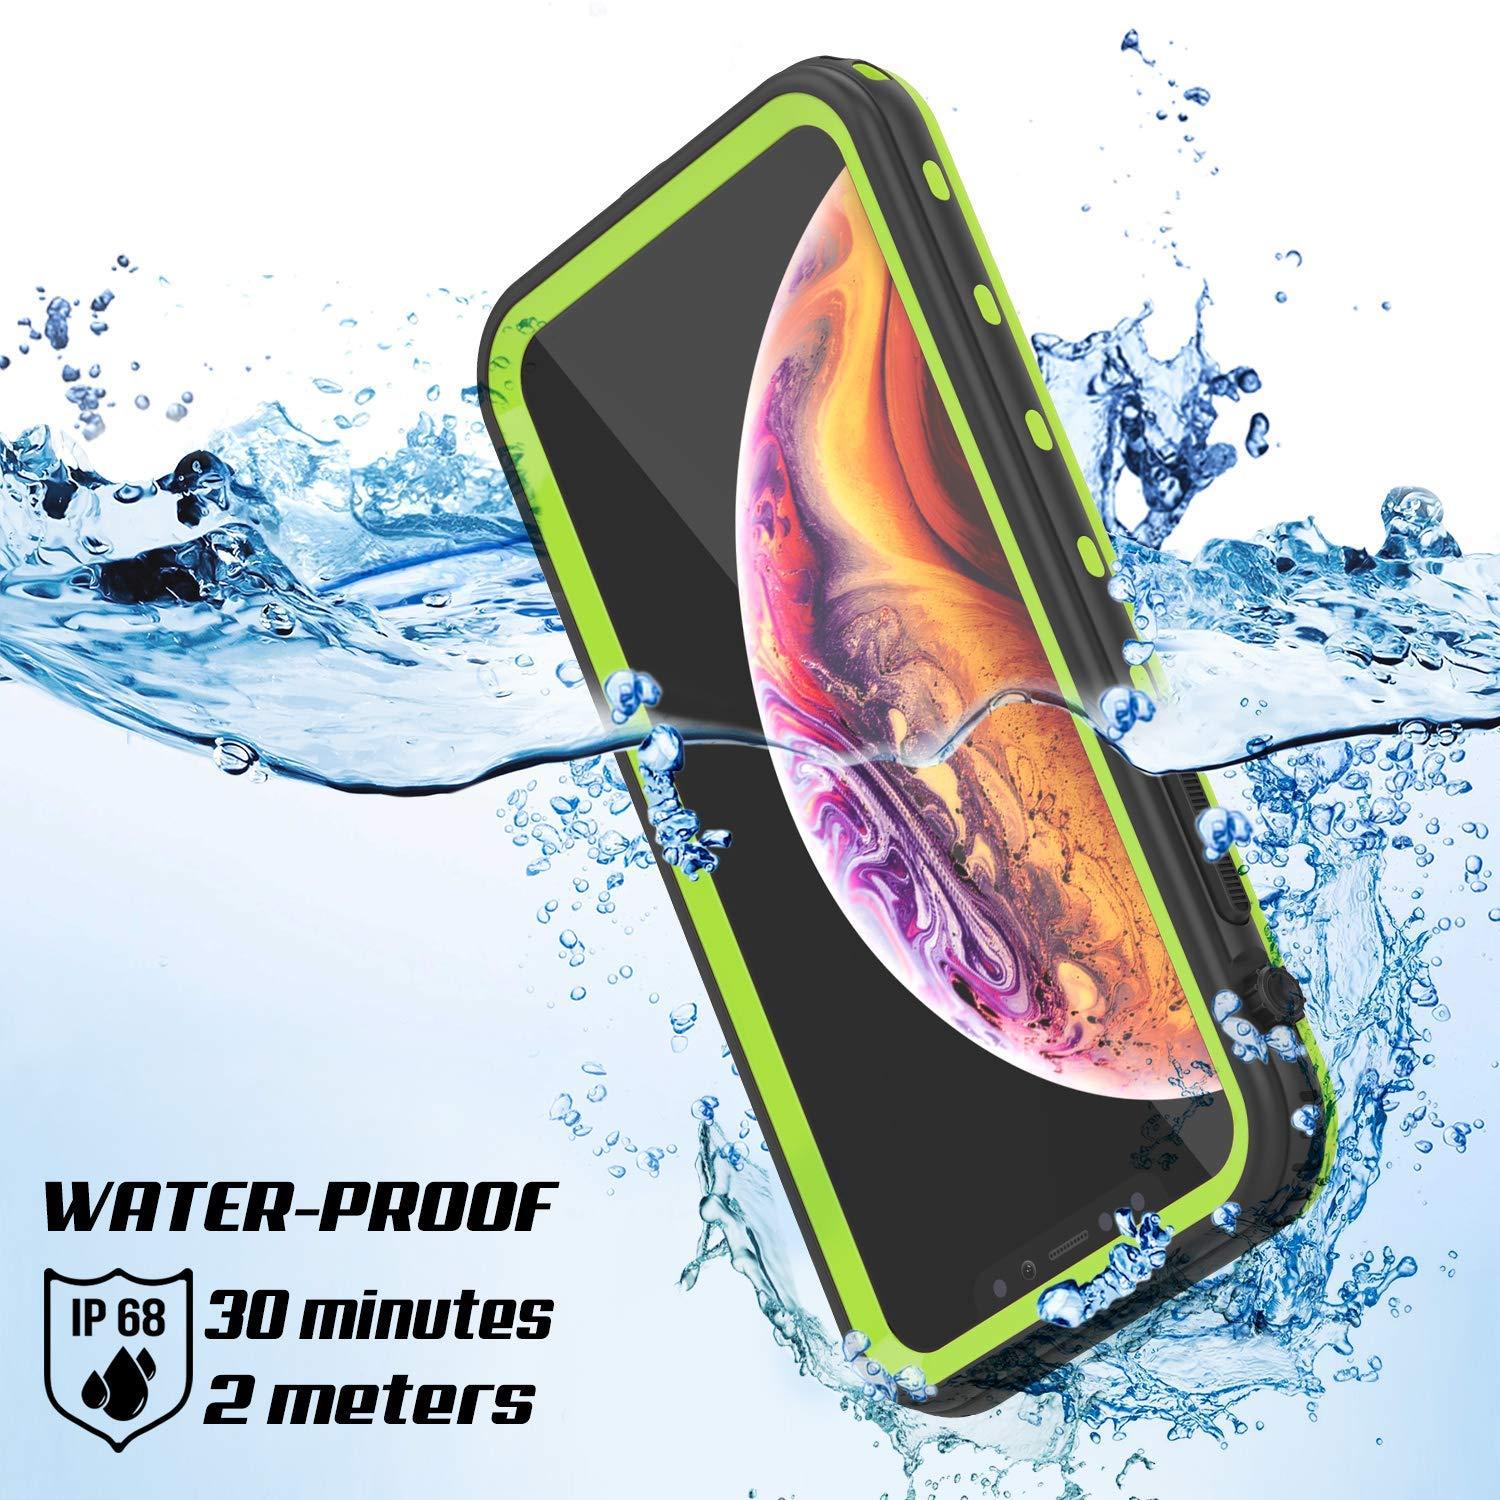 iPhone XS Max Waterproof Case, Punkcase [KickStud Series] Armor Cover [Light-Green]